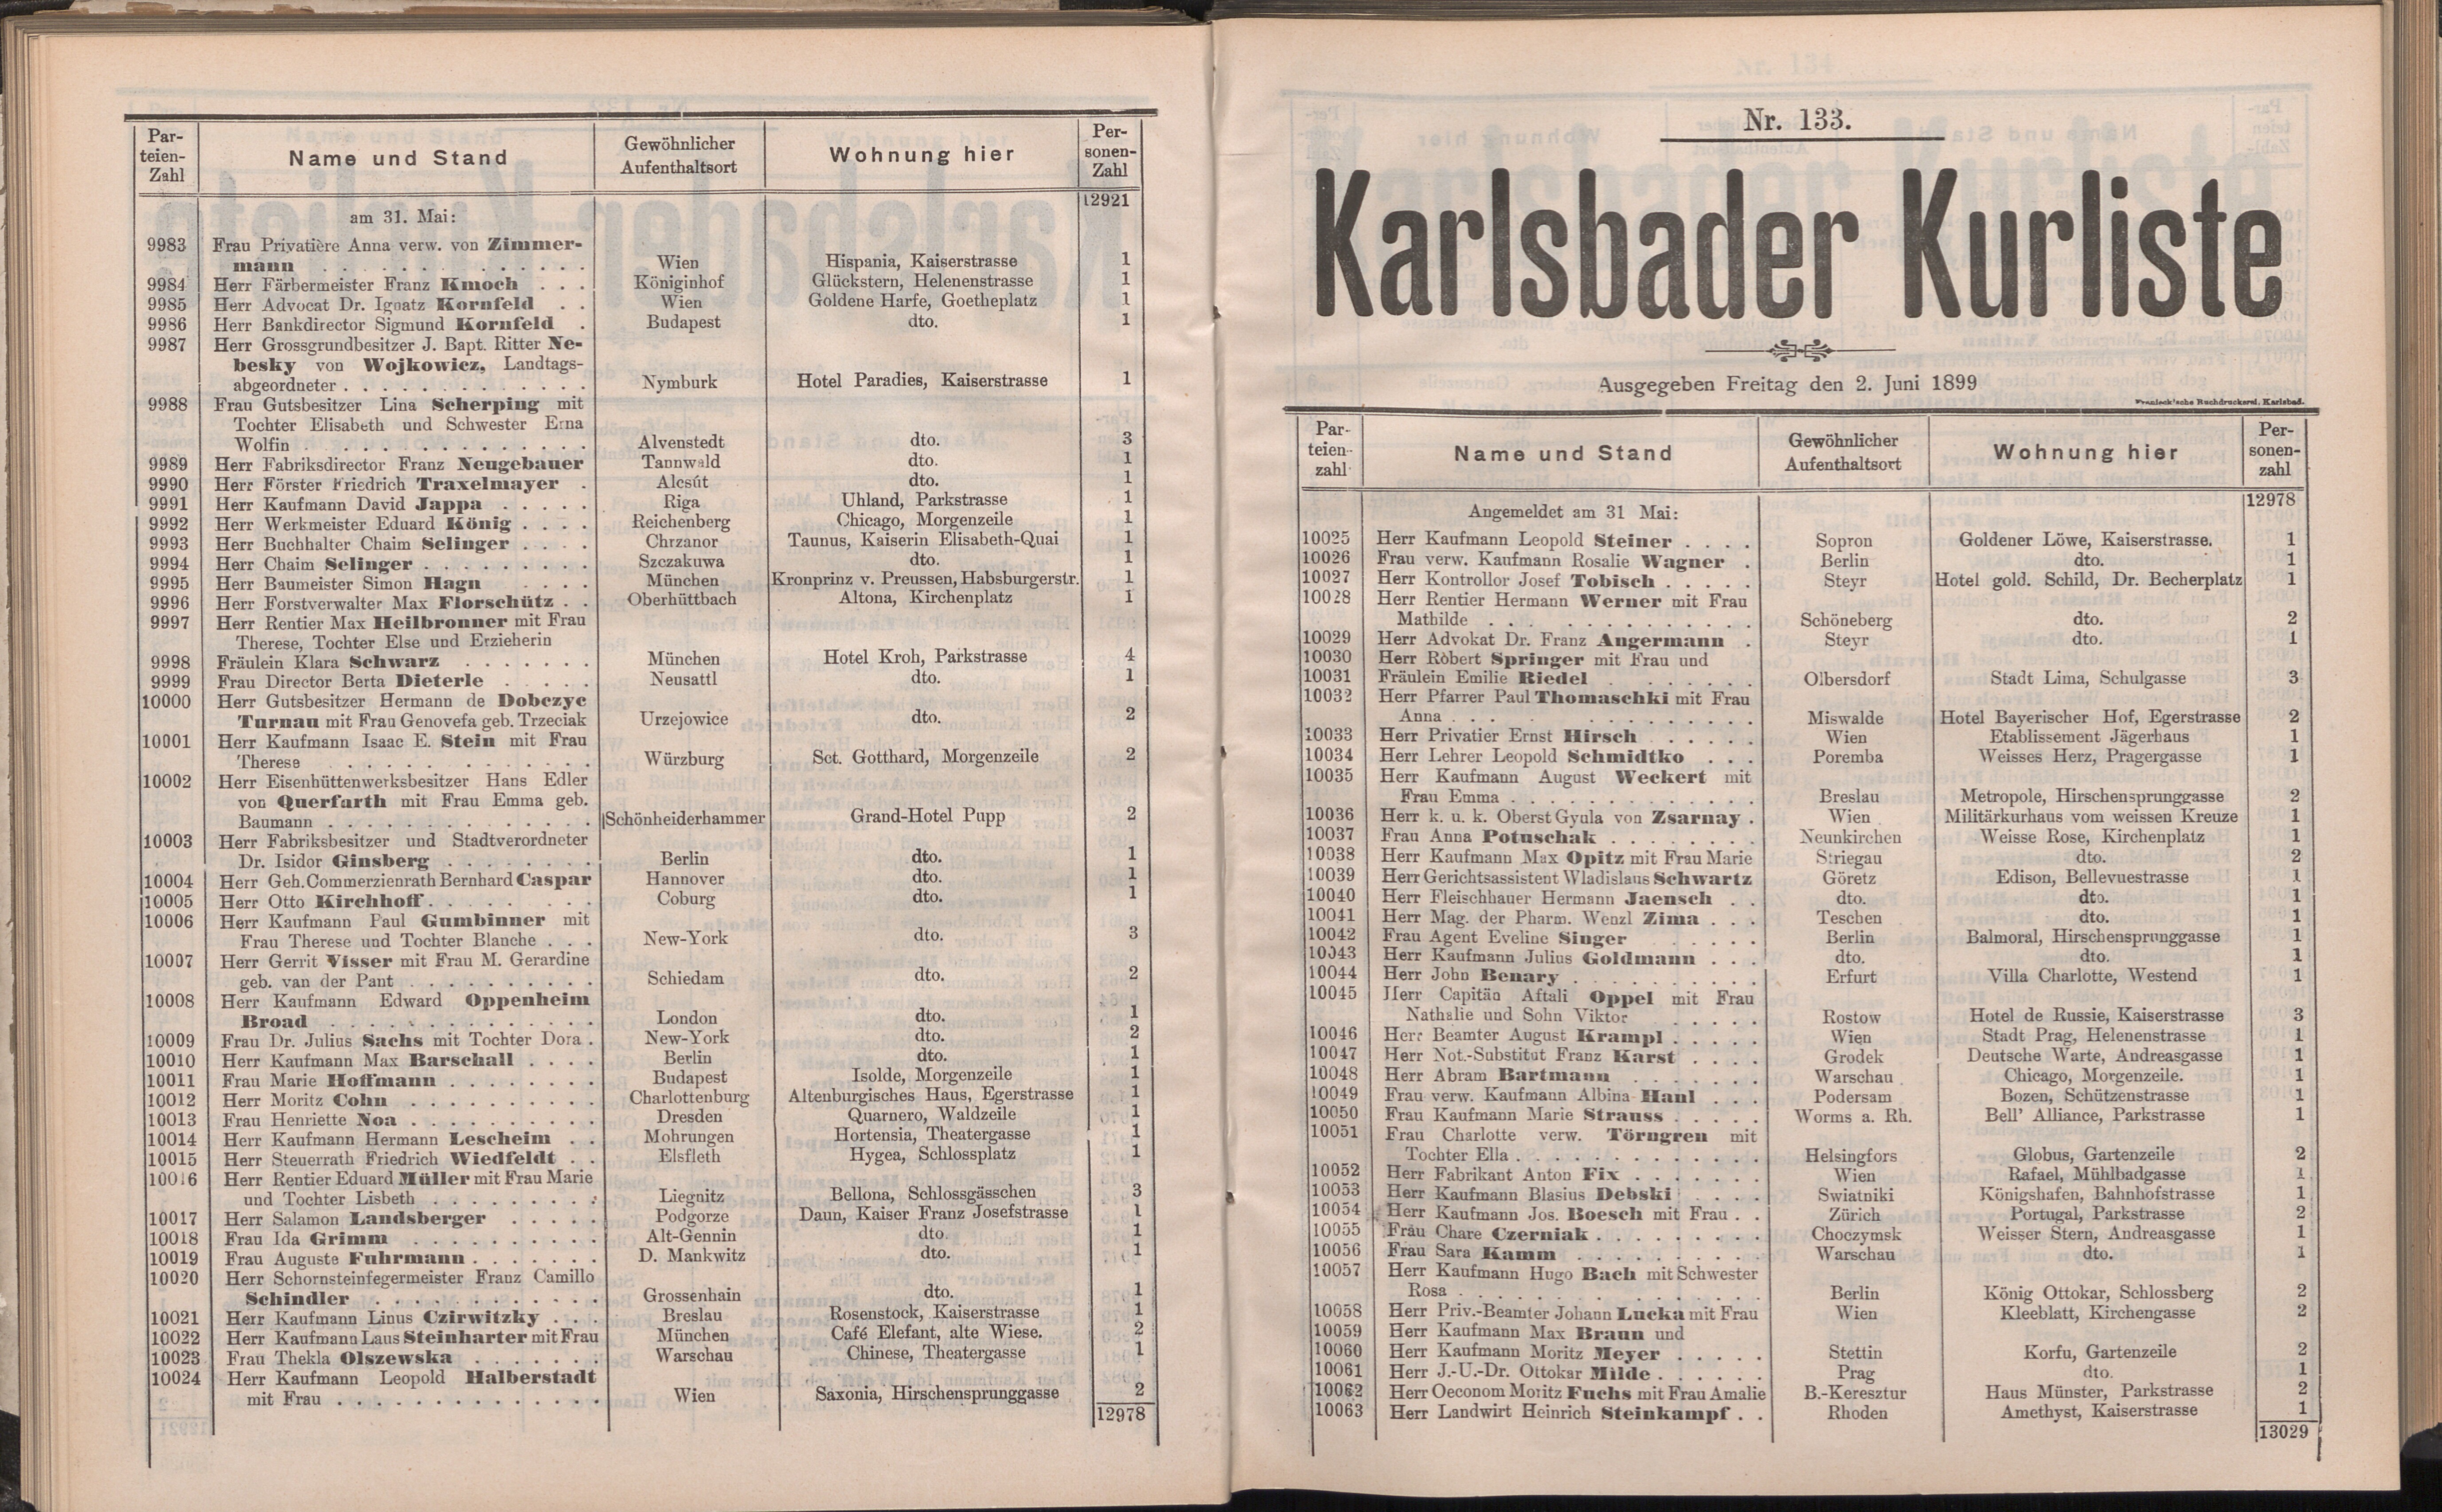 151. soap-kv_knihovna_karlsbader-kurliste-1899_1520